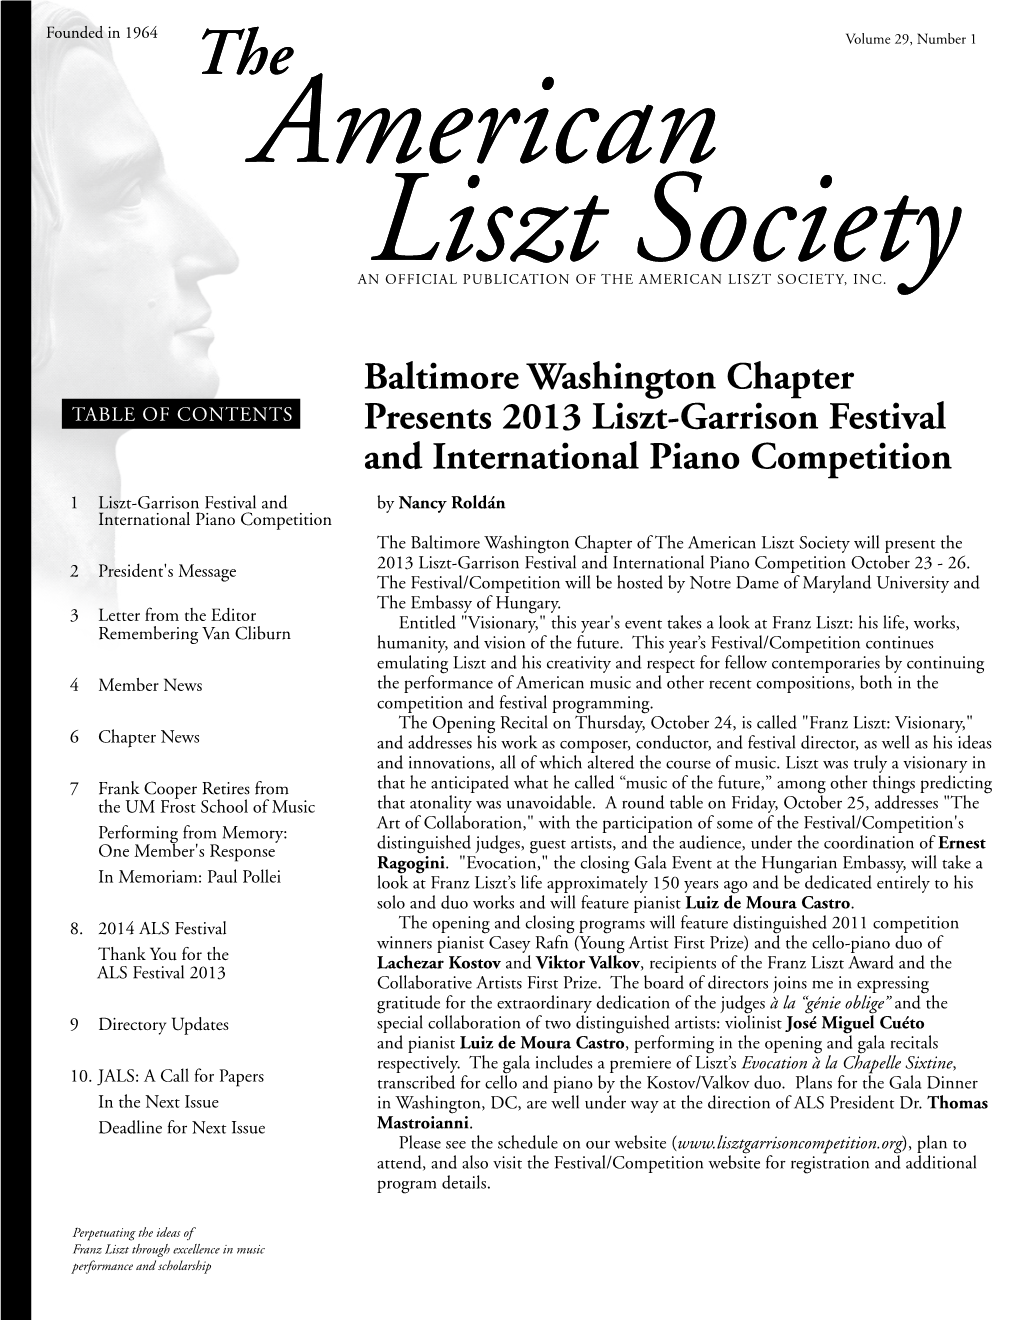 Baltimore Washington Chapter Presents 2013 Liszt-Garrison